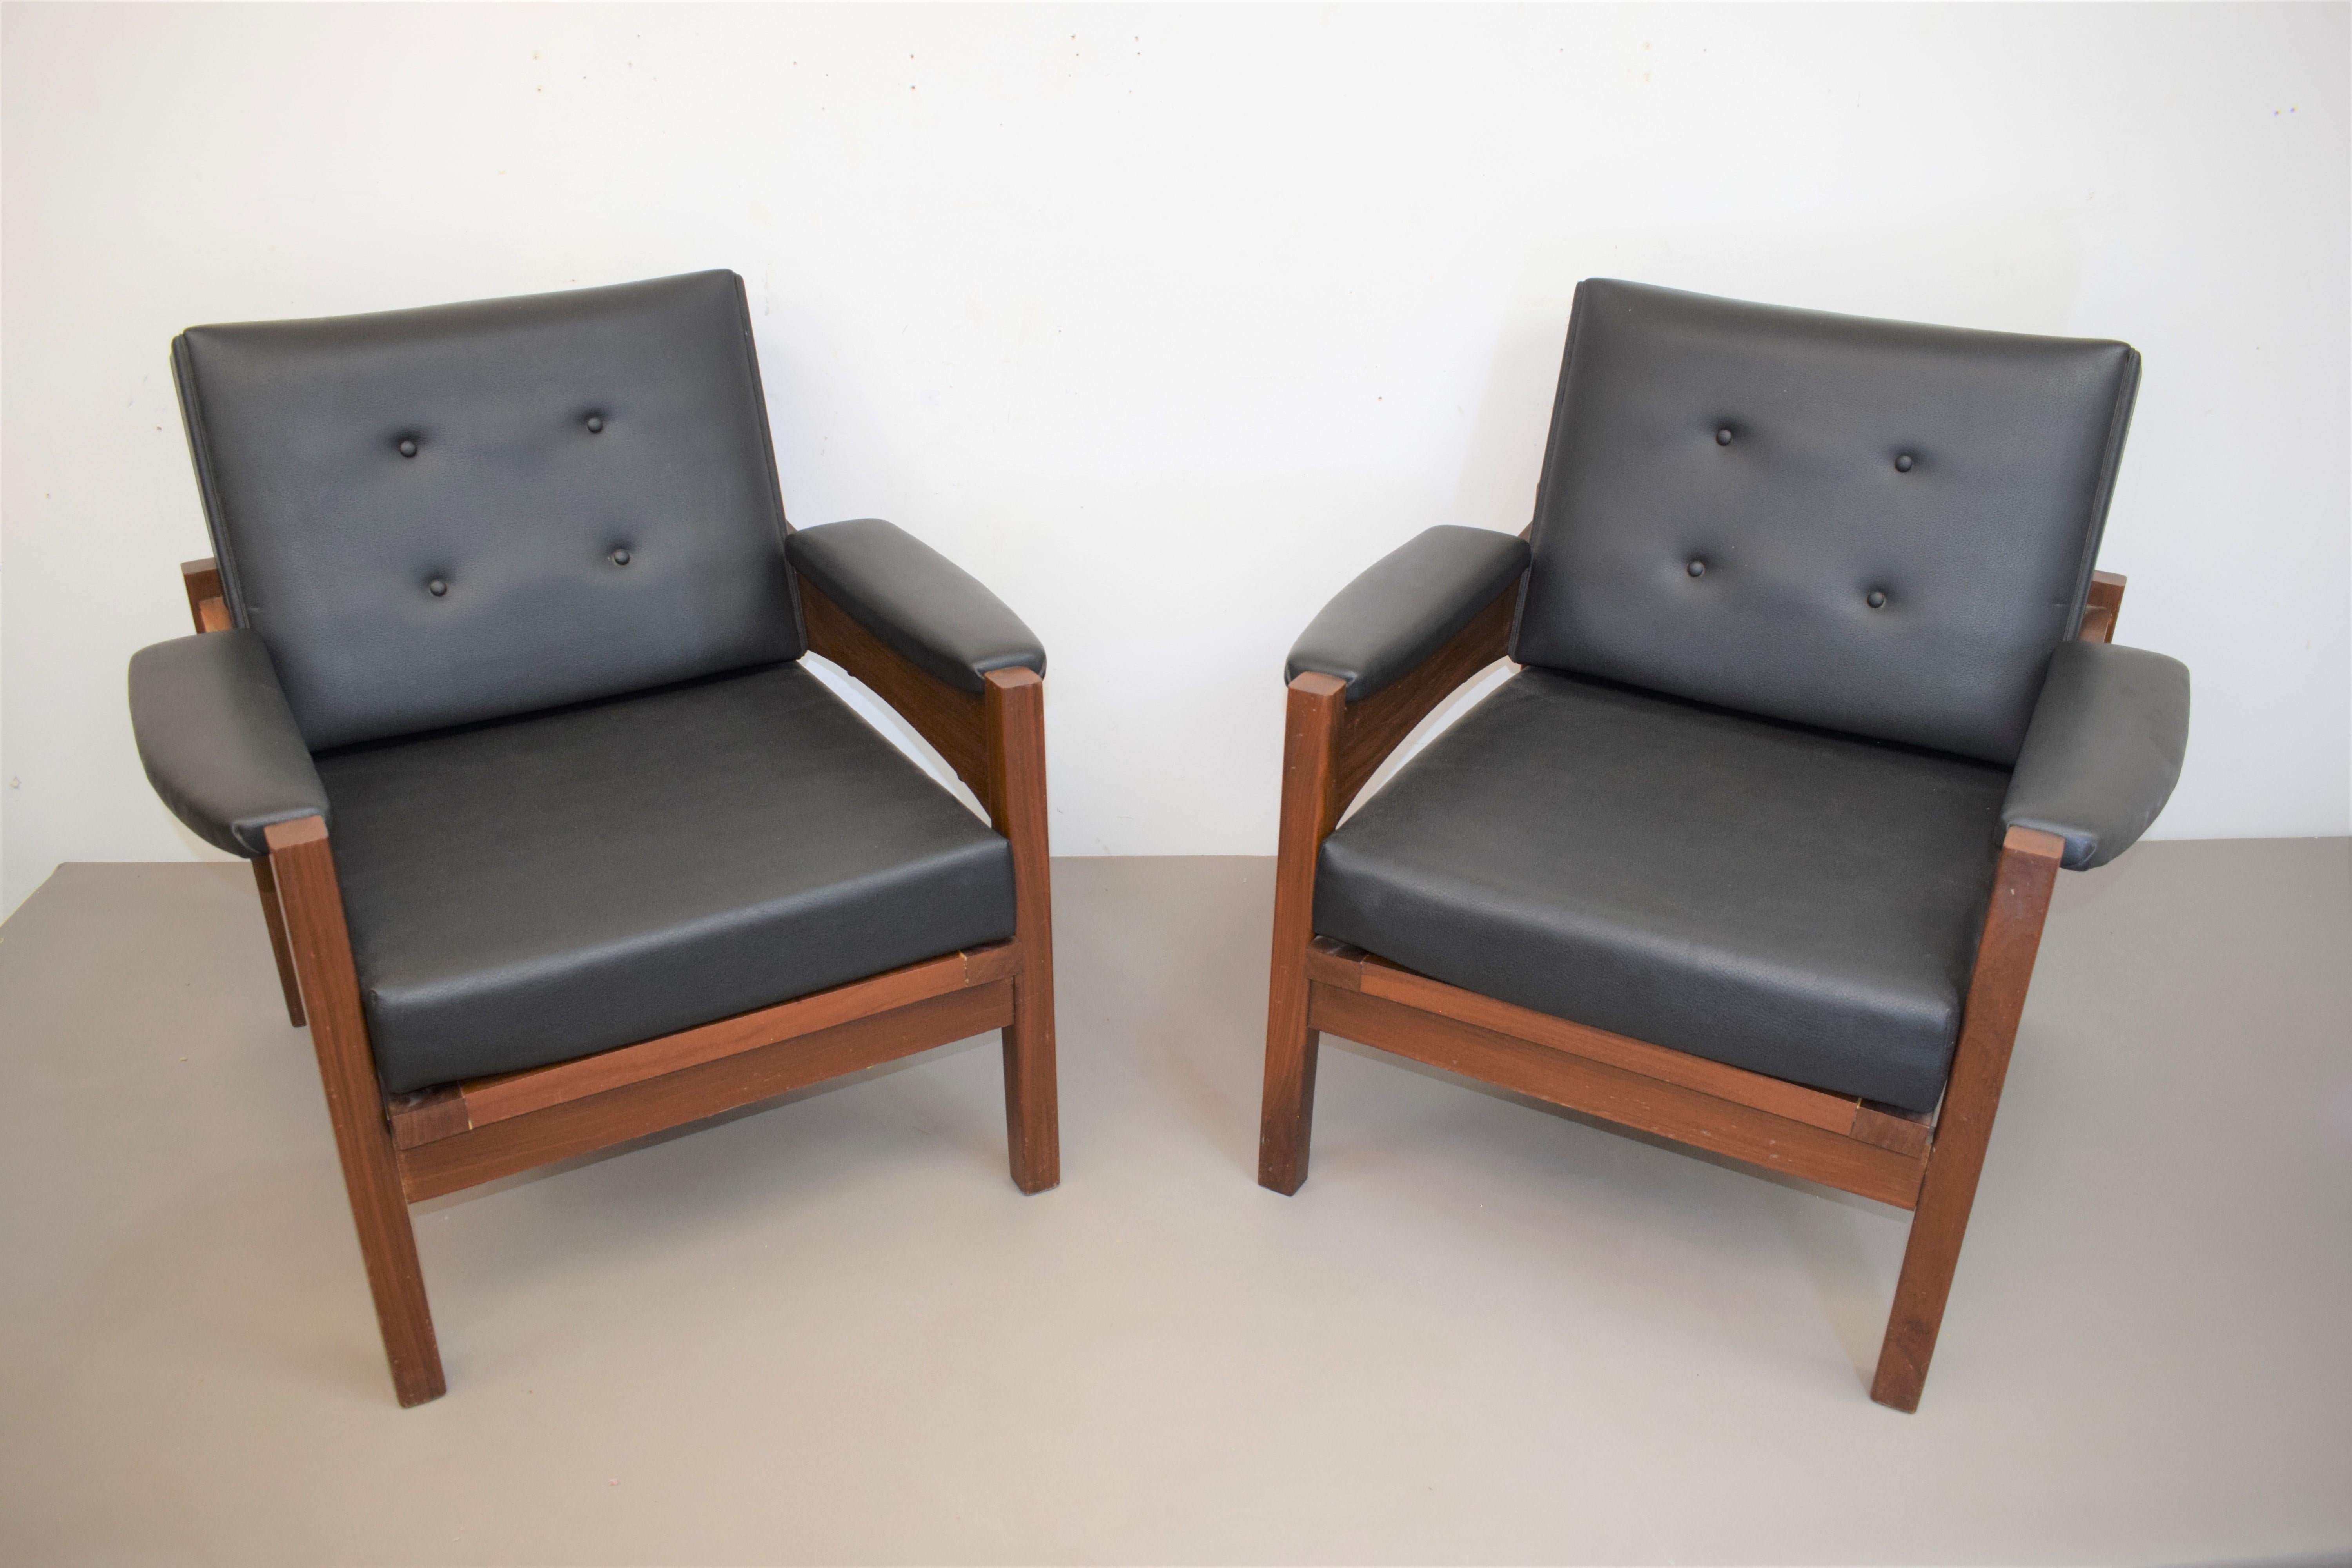 Pair of Italian armchairs, 1970s.
Dimensions: H=80cm; W=77 cm; D=72 cm; seat height = 40 cm.